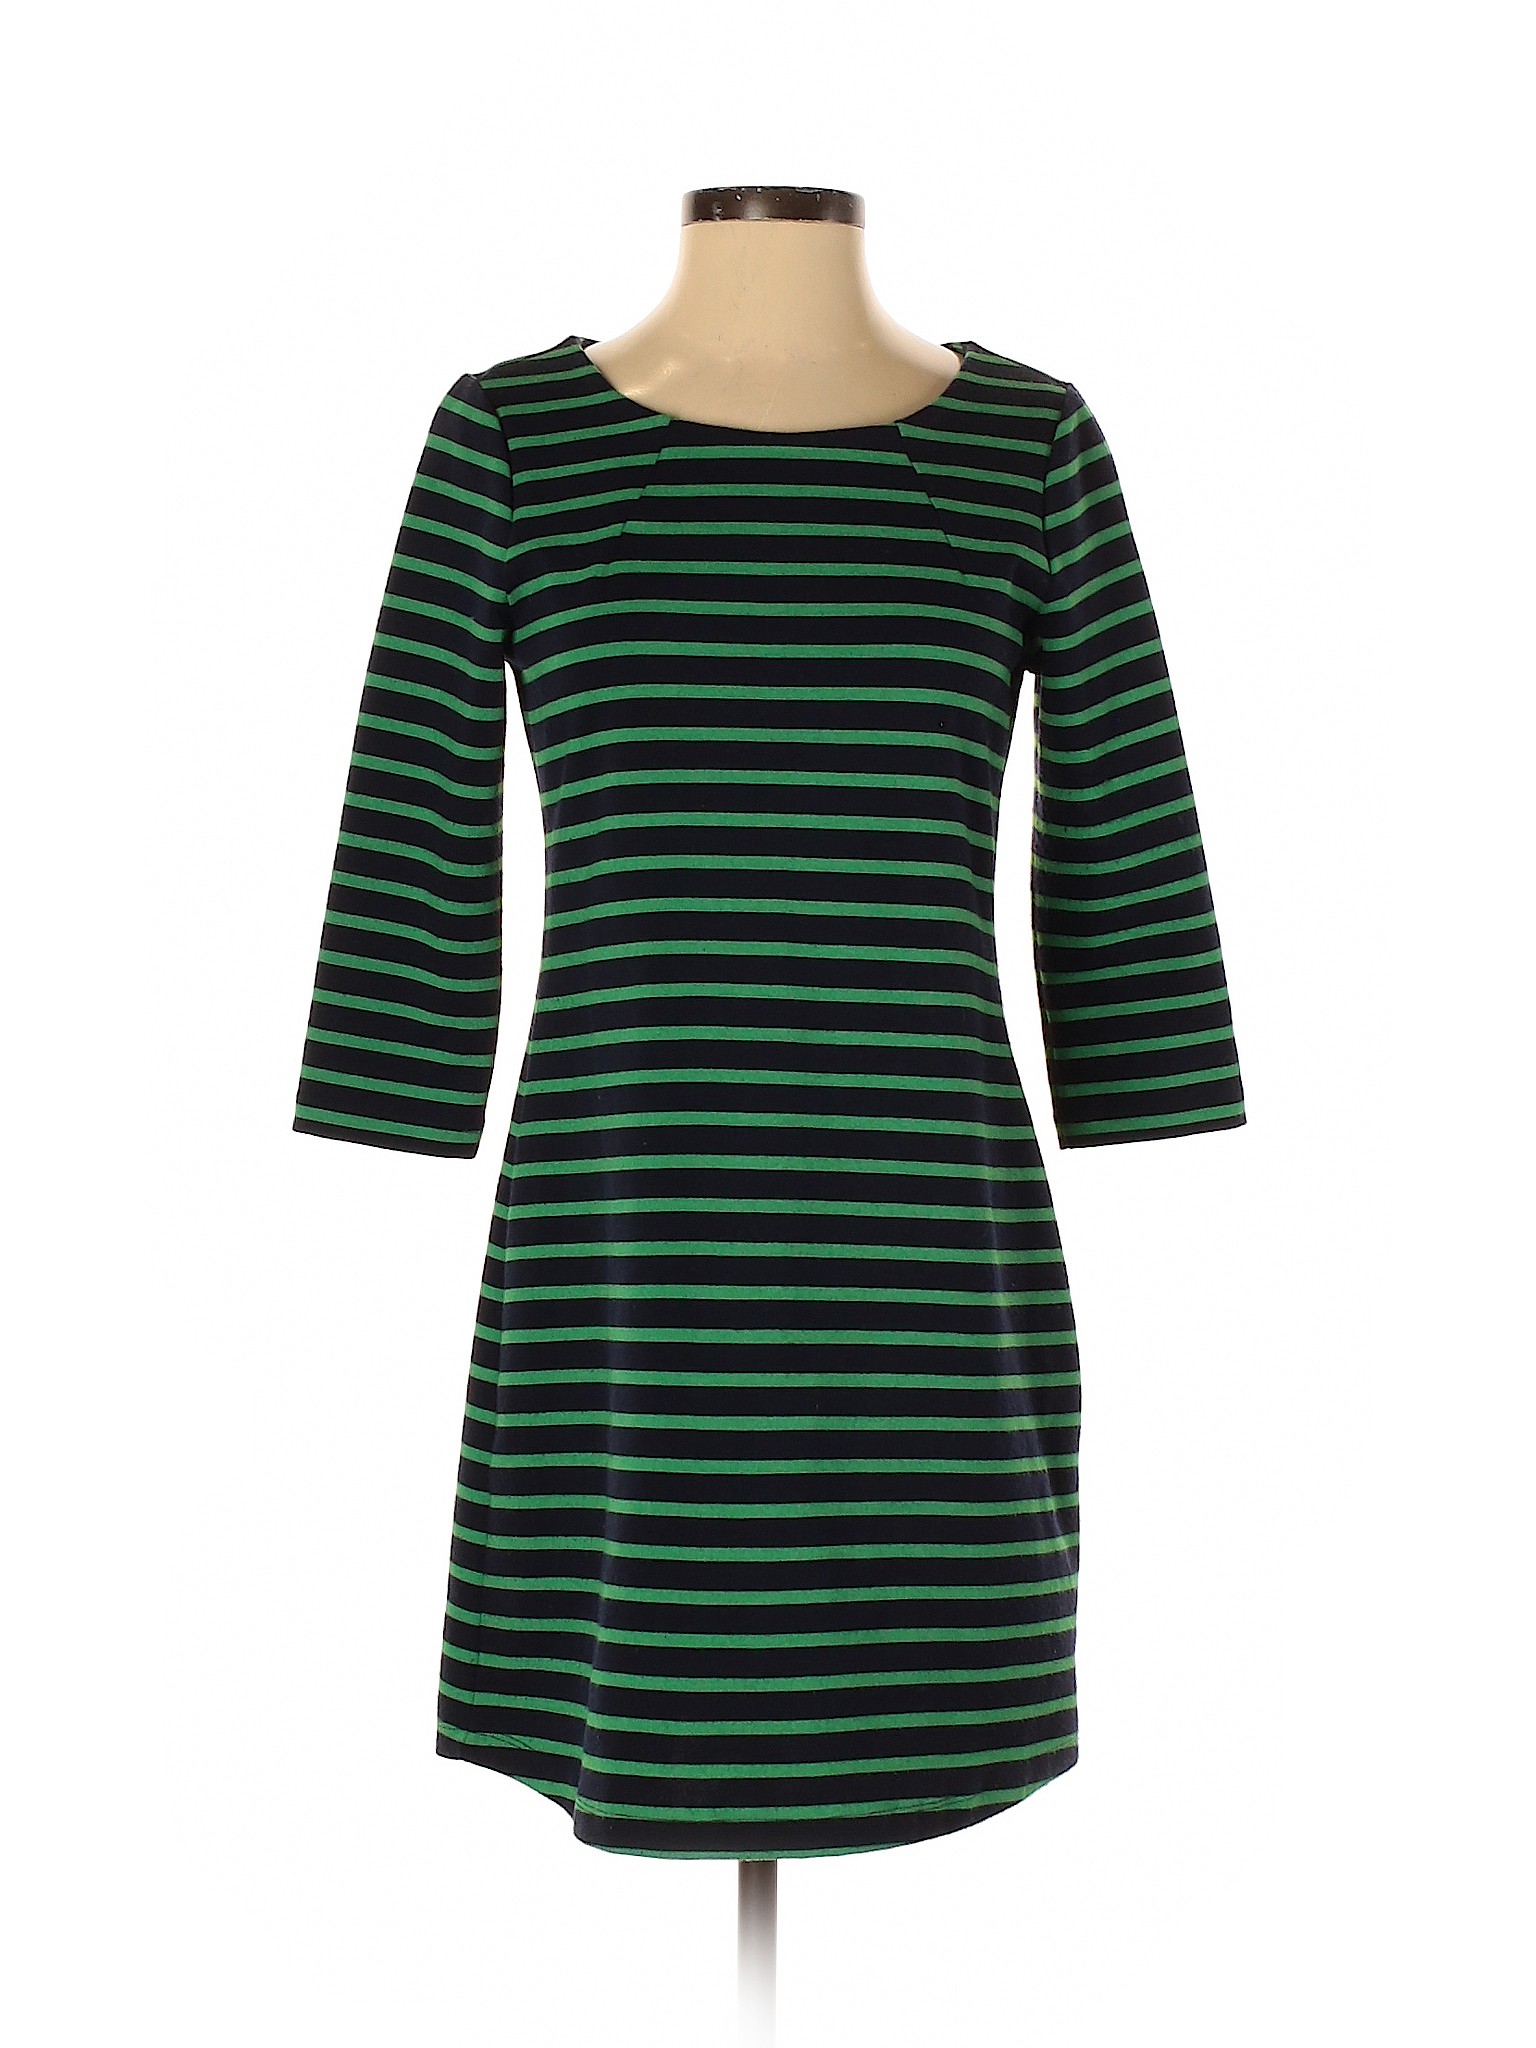 Gap Outlet Women Green Casual Dress XS | eBay